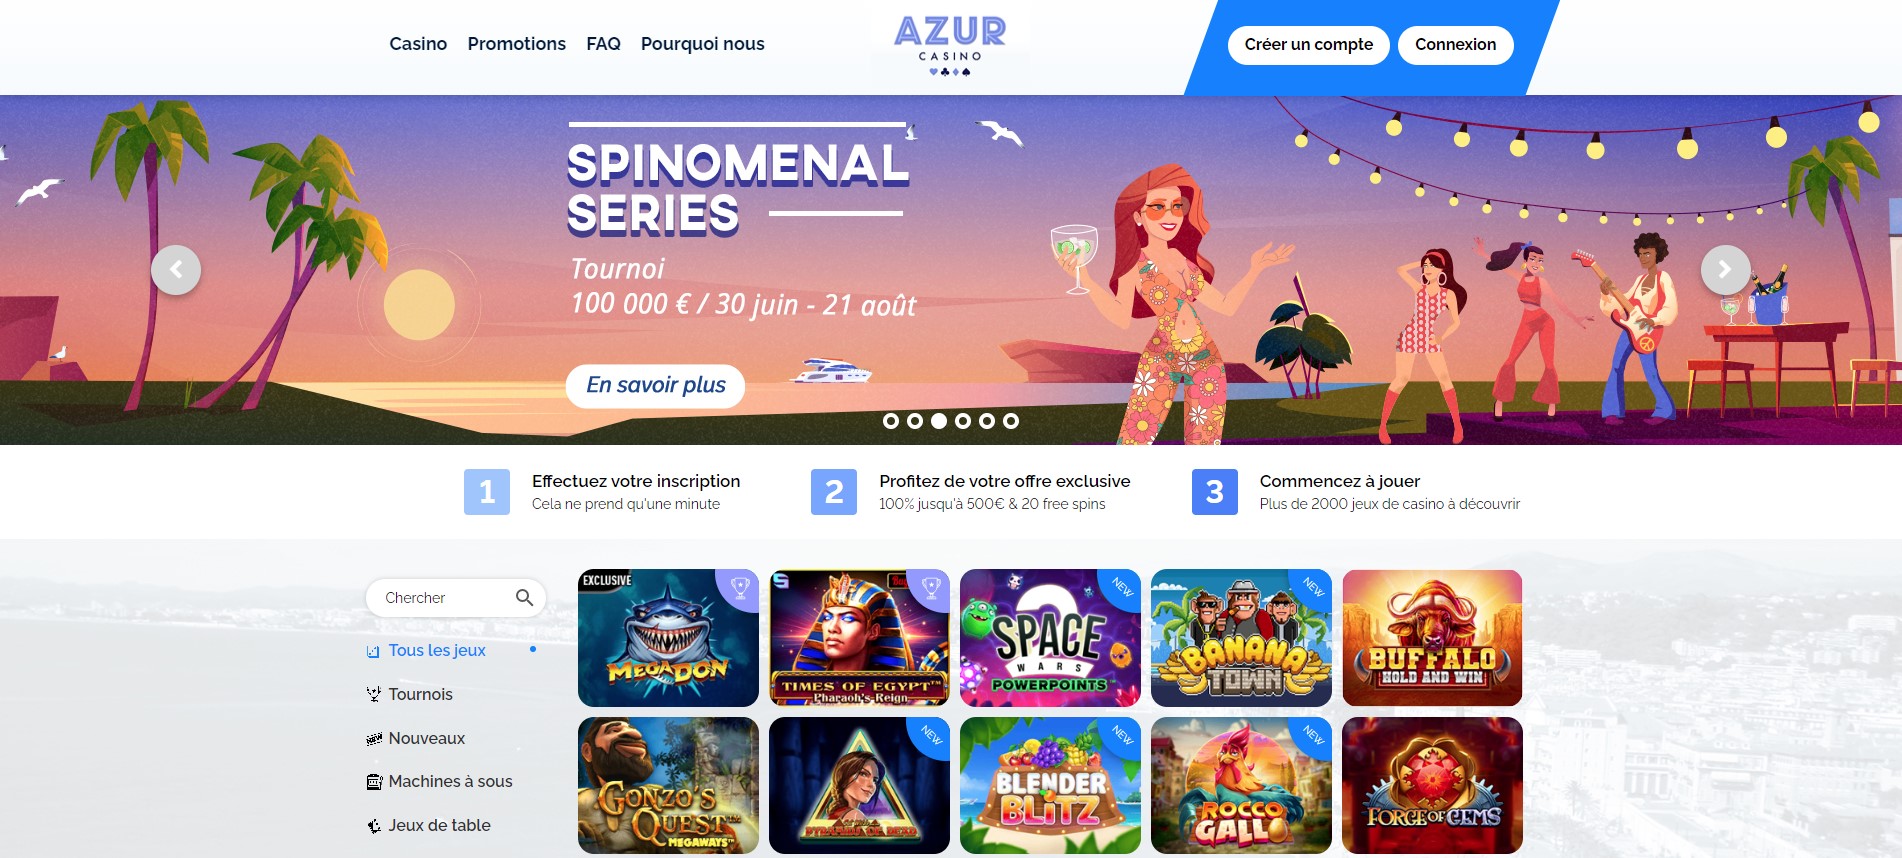 Azur casino avis